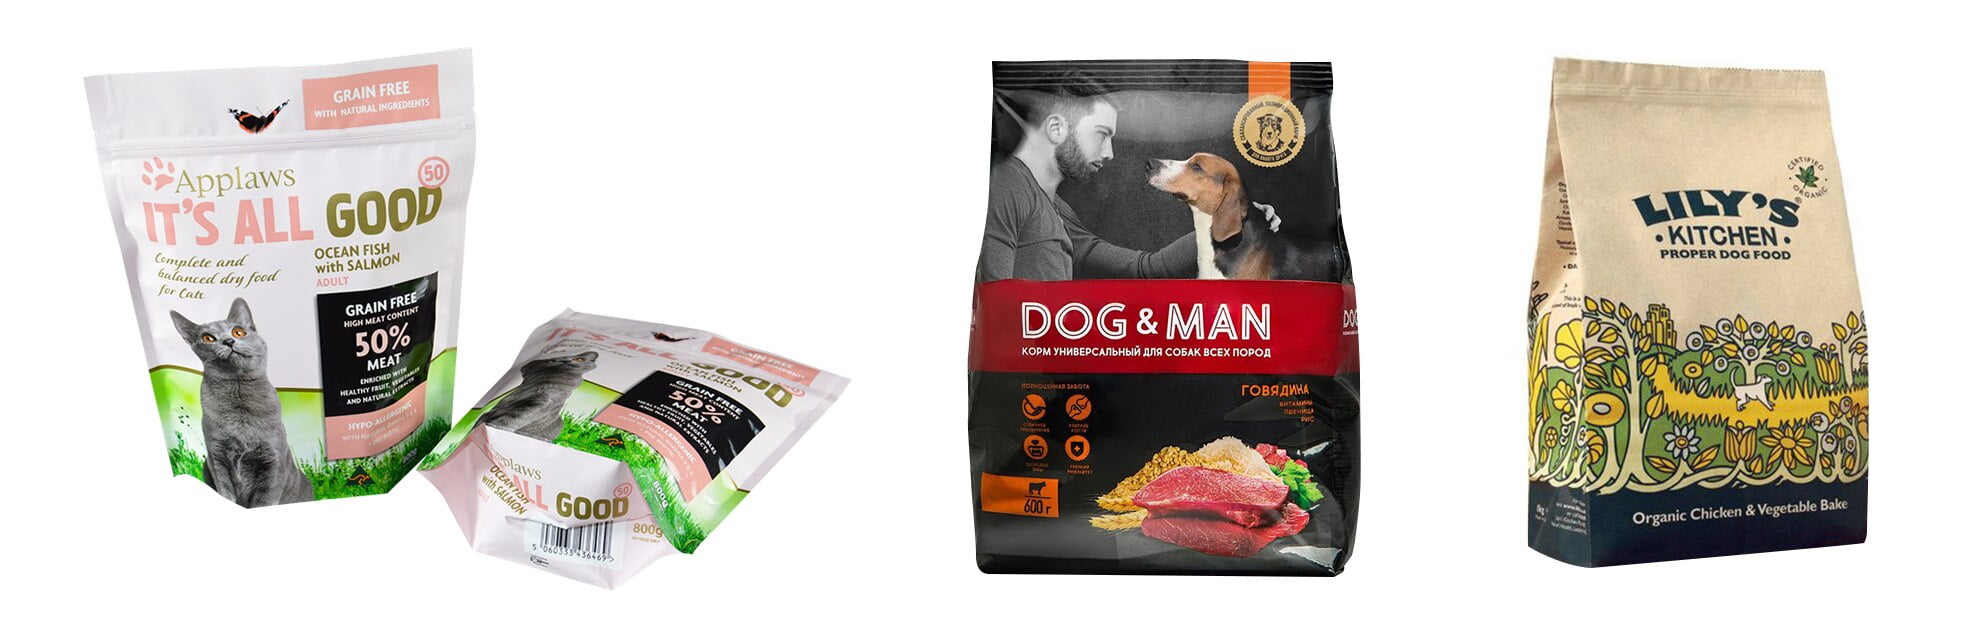 printed-kraft-paper-stand-up-dog-food-packaging-side-gusset-bags-for-dog-foods.jpg